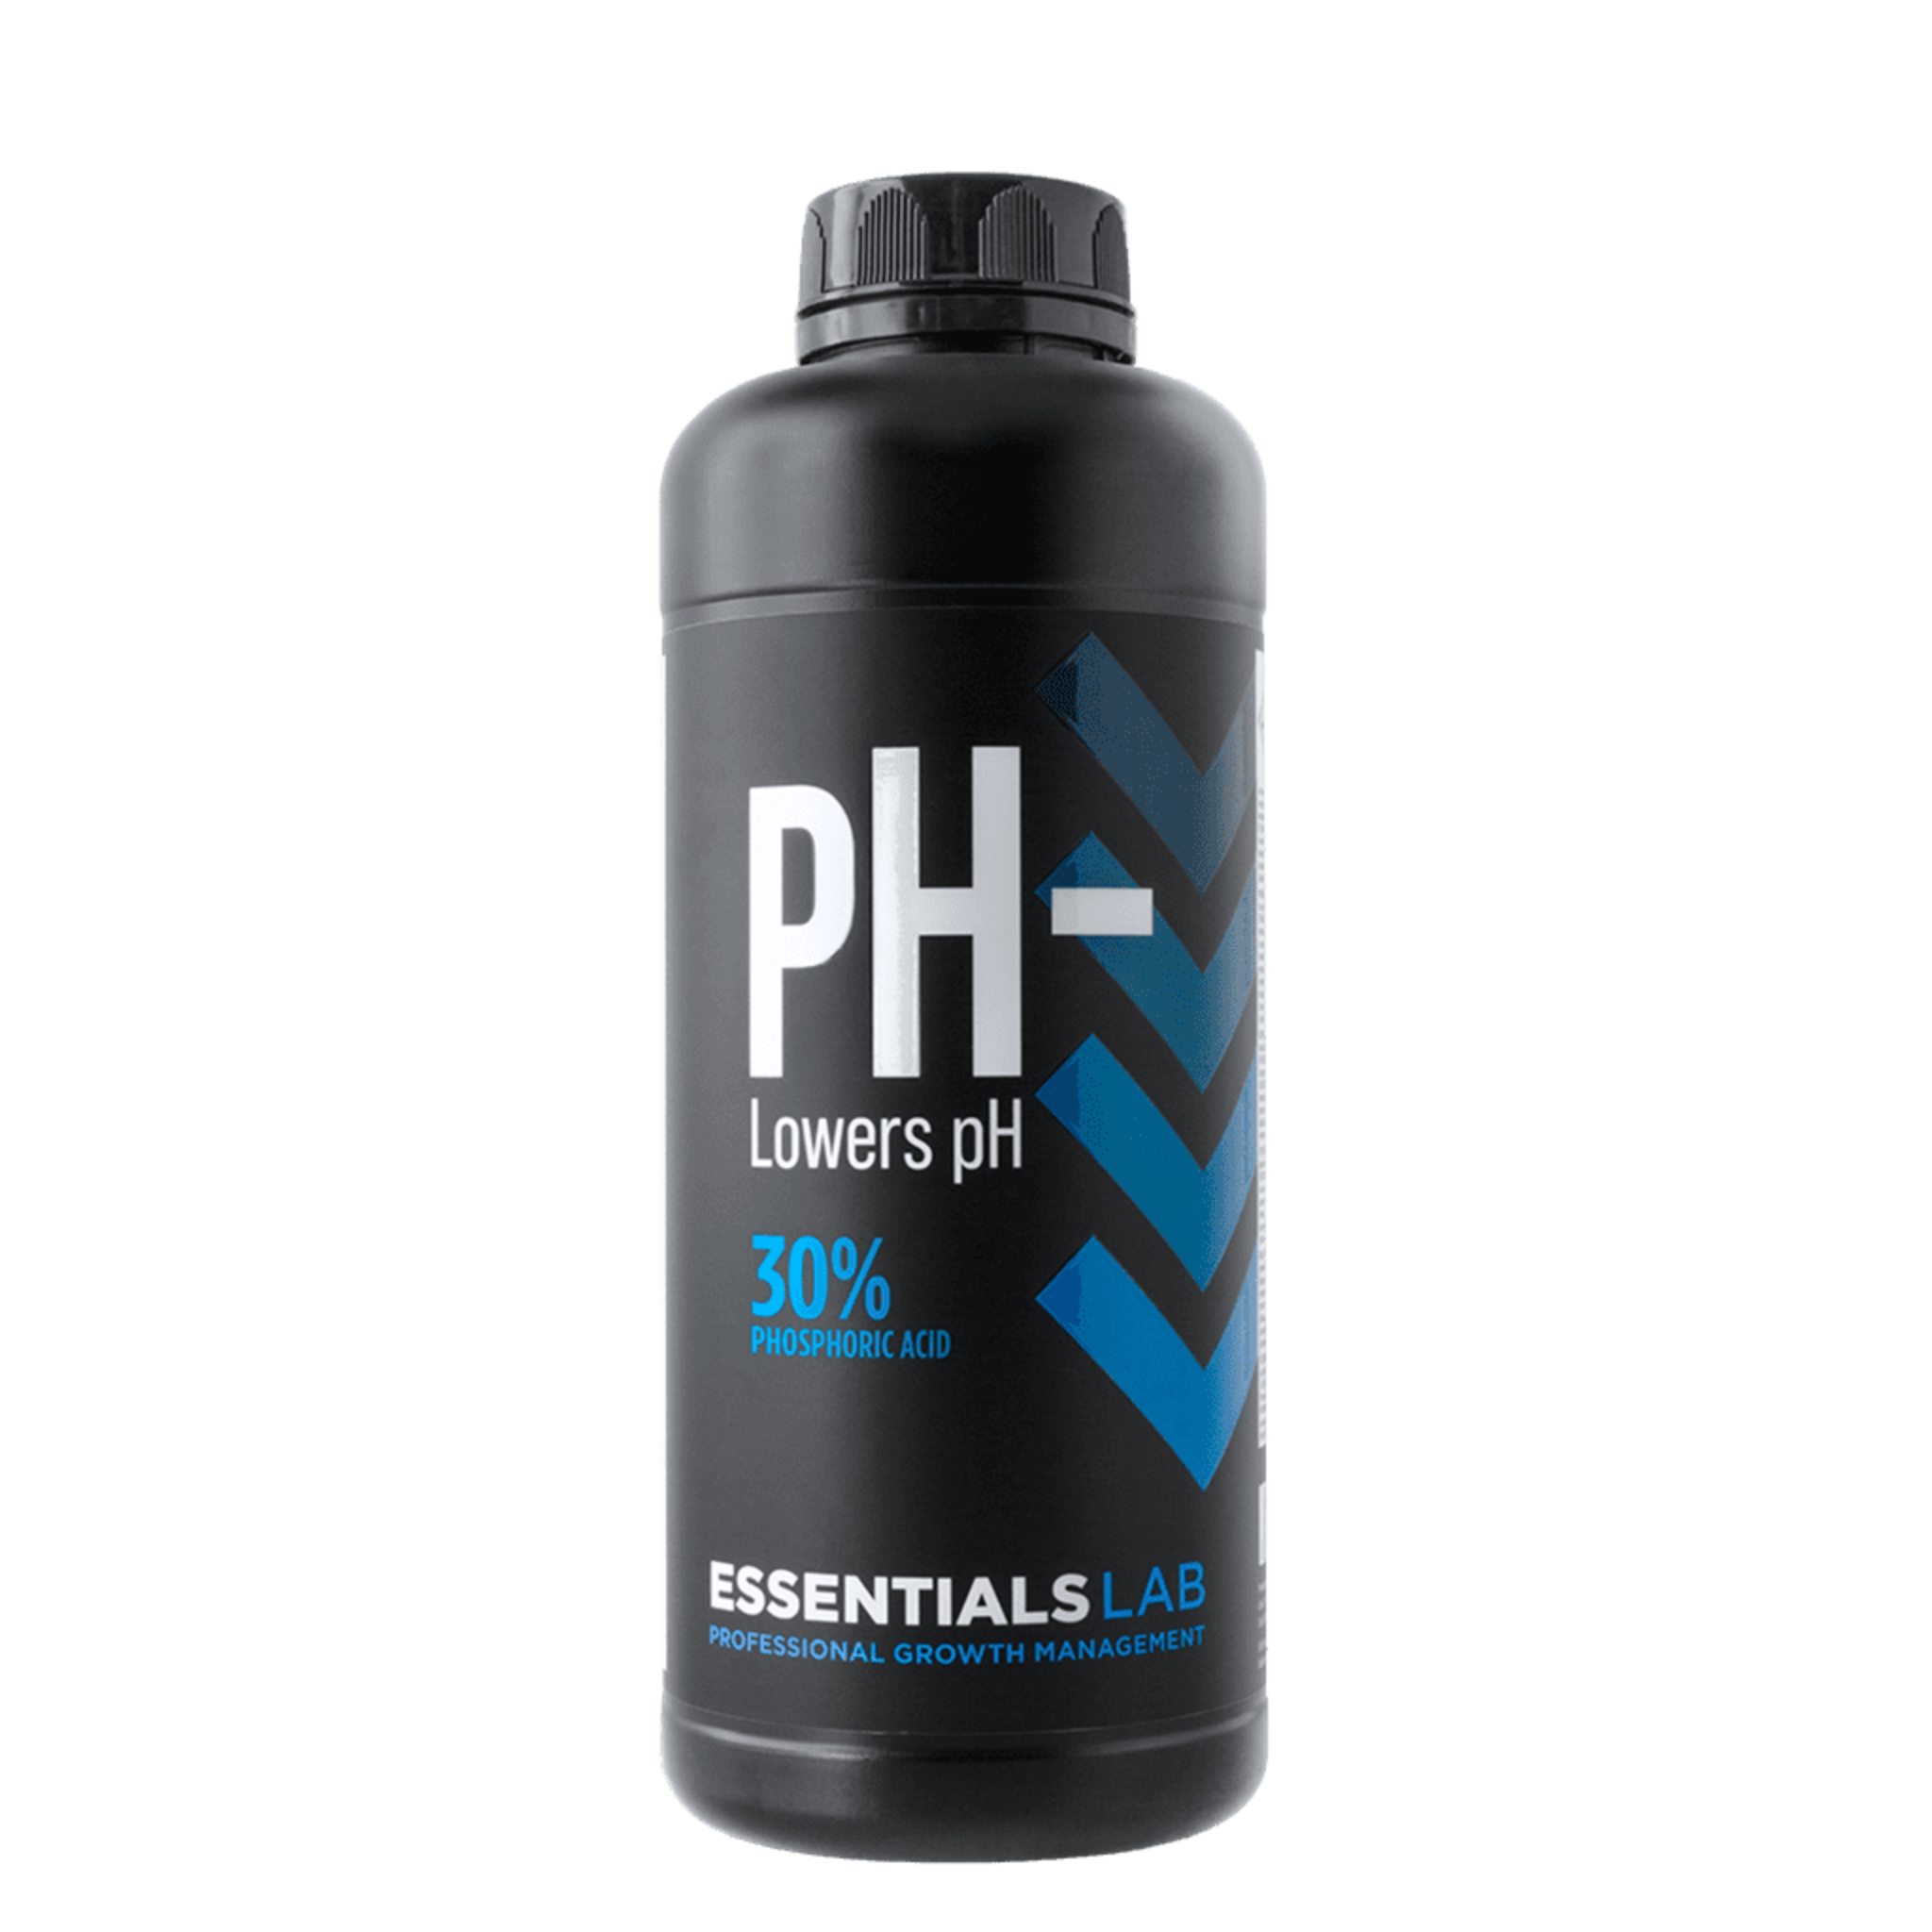 Essentials Lab pH Down